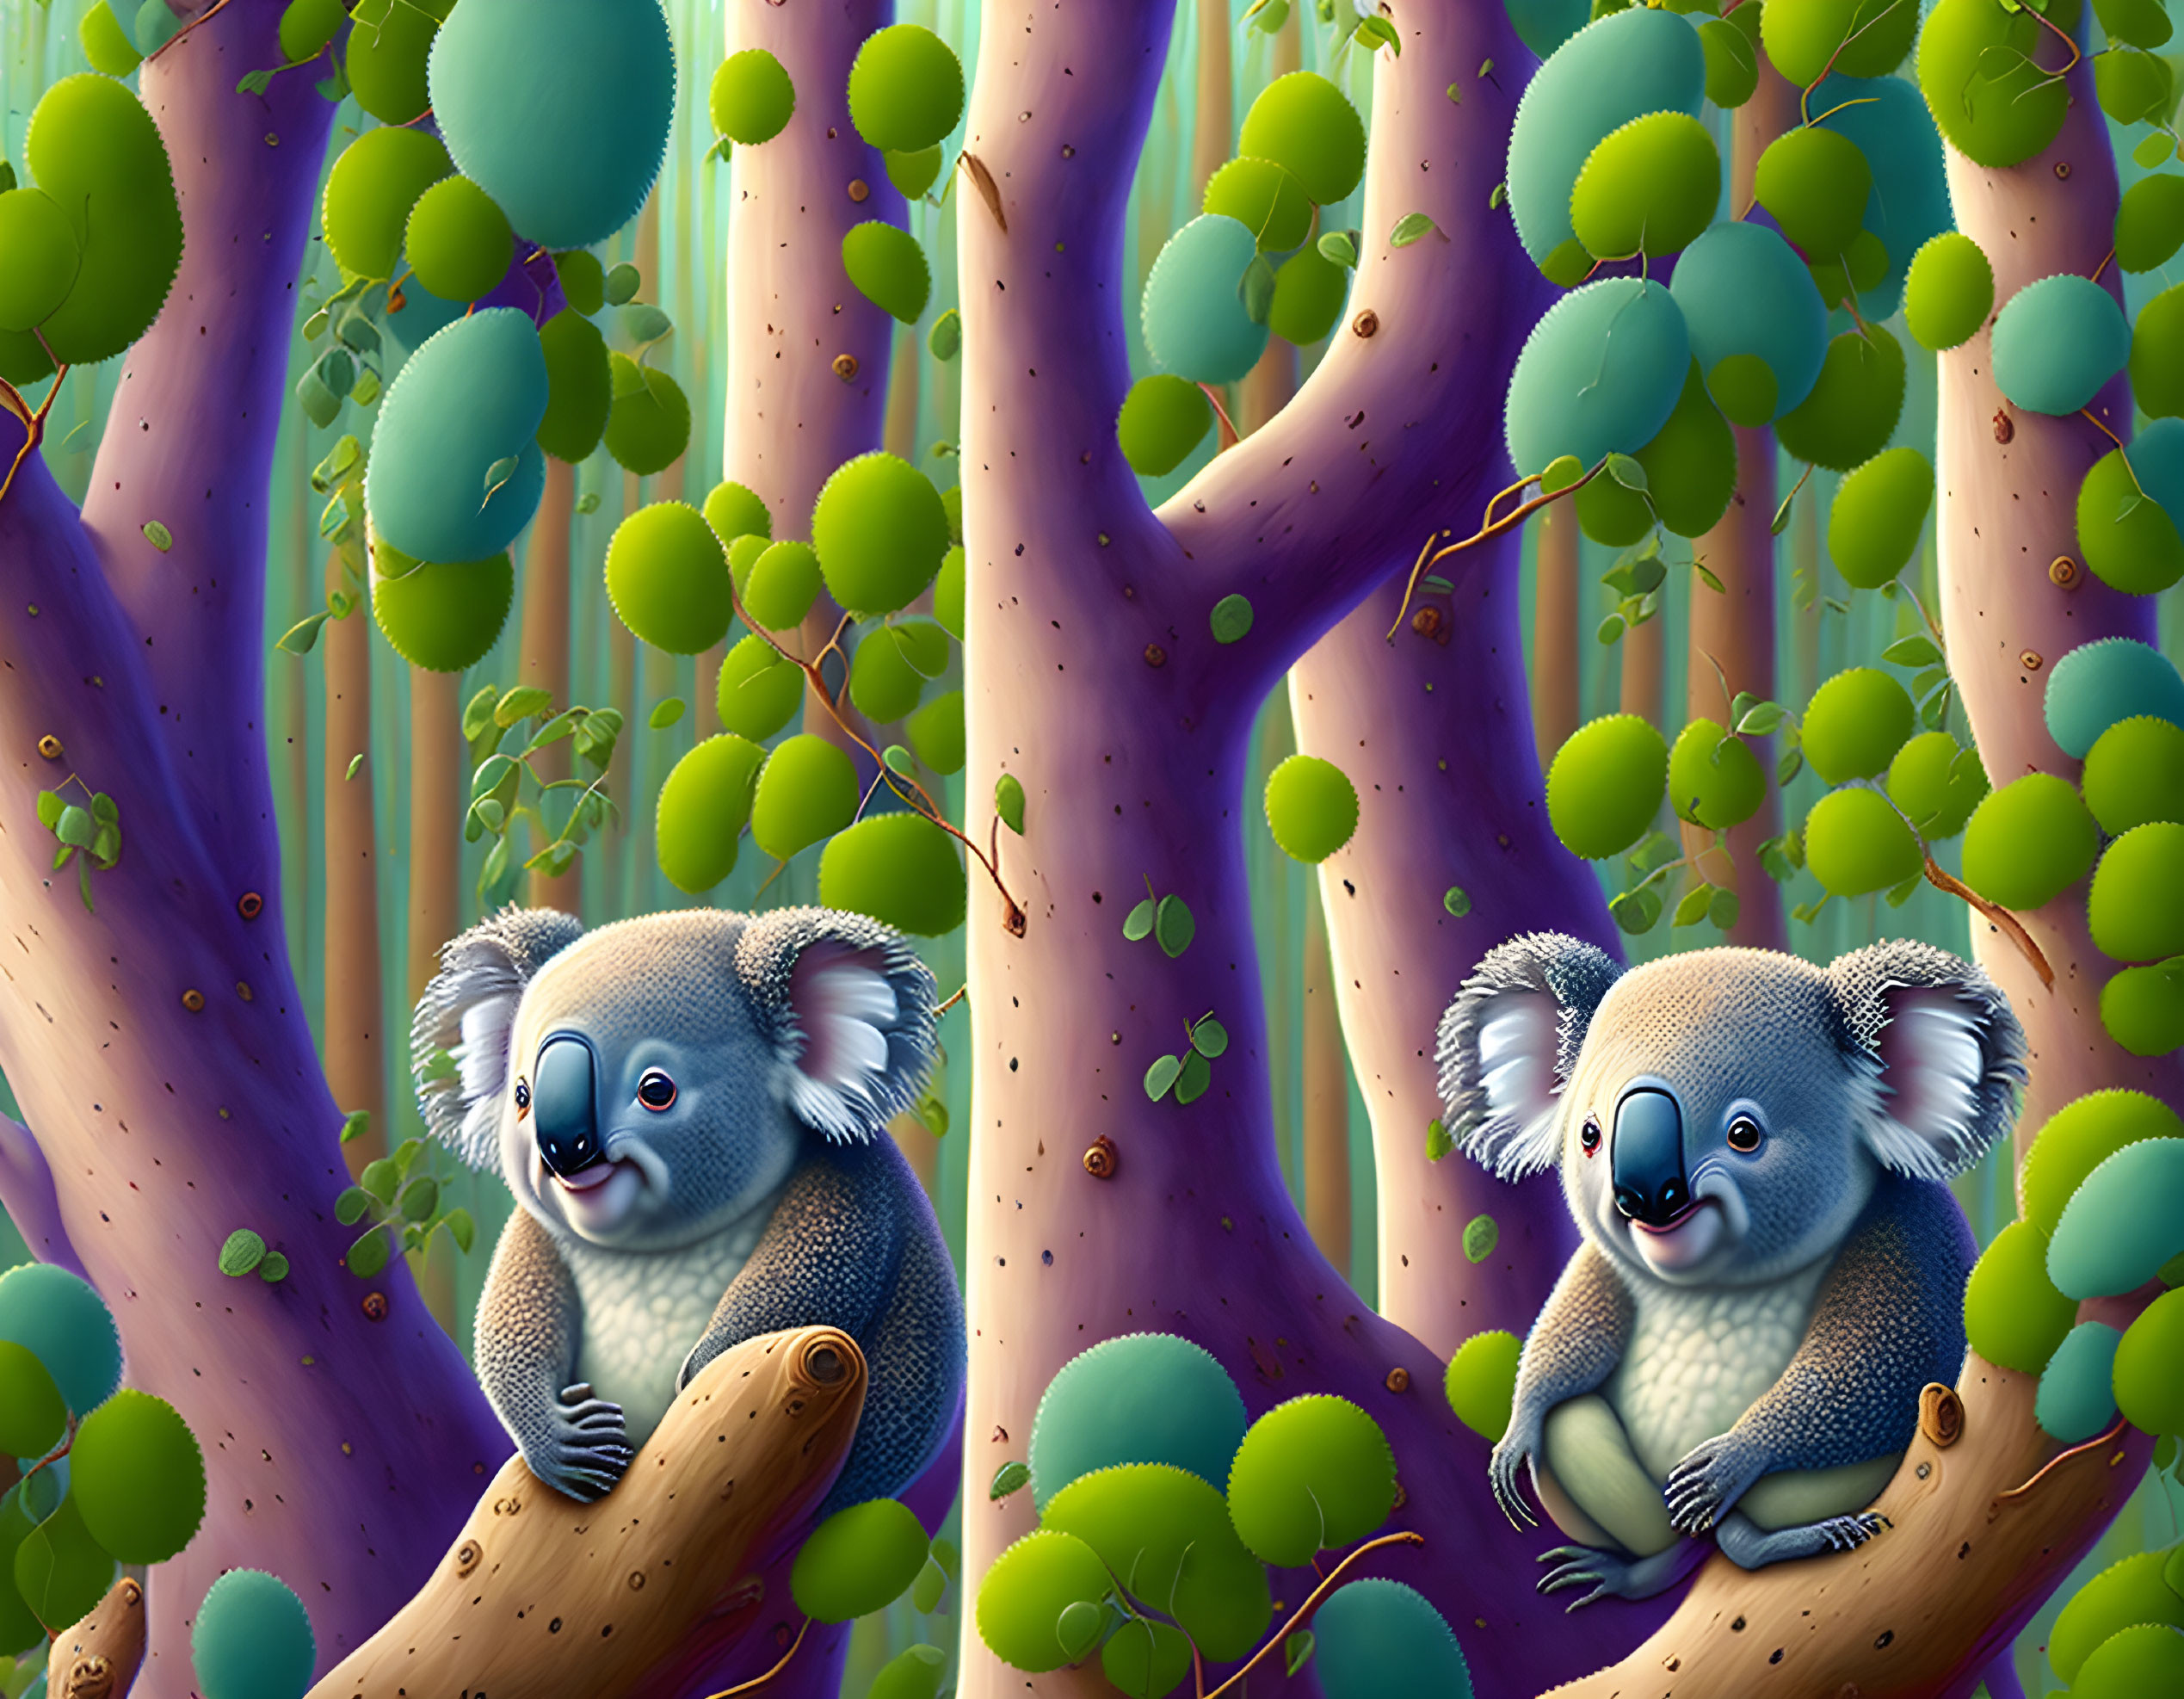 Colorful Digital Illustration: Koalas on Eucalyptus Branches in Lush